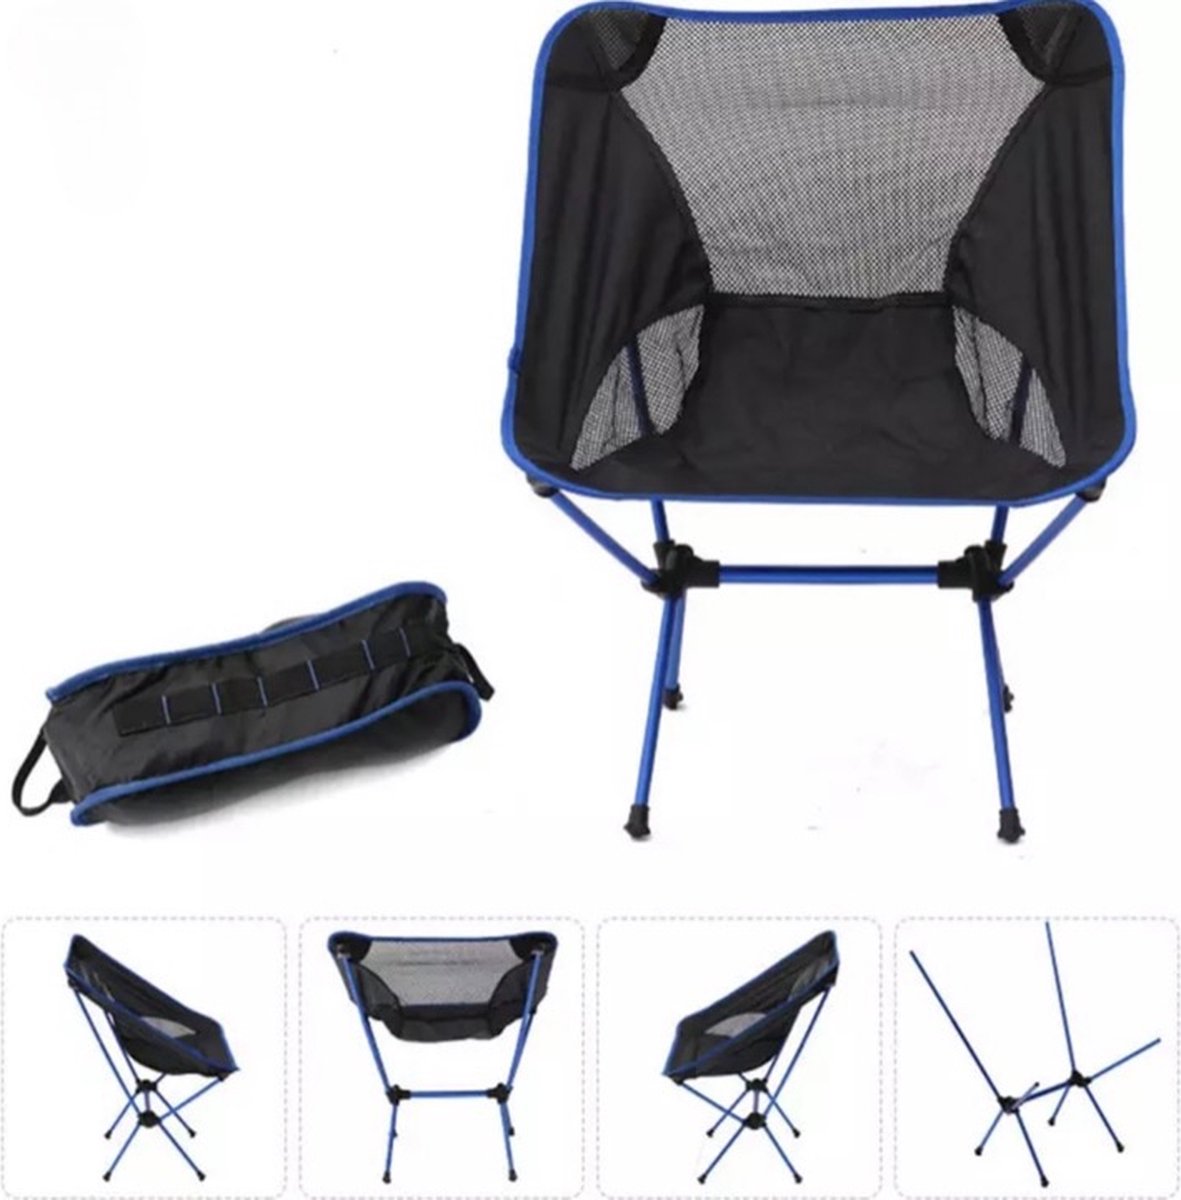 Strandstoel opvouwbaar - Kampeer vouwstoel - Visstoel/kruk - Plooistoel - Karperstoel - Ultralicht picknick meubel - Blauw